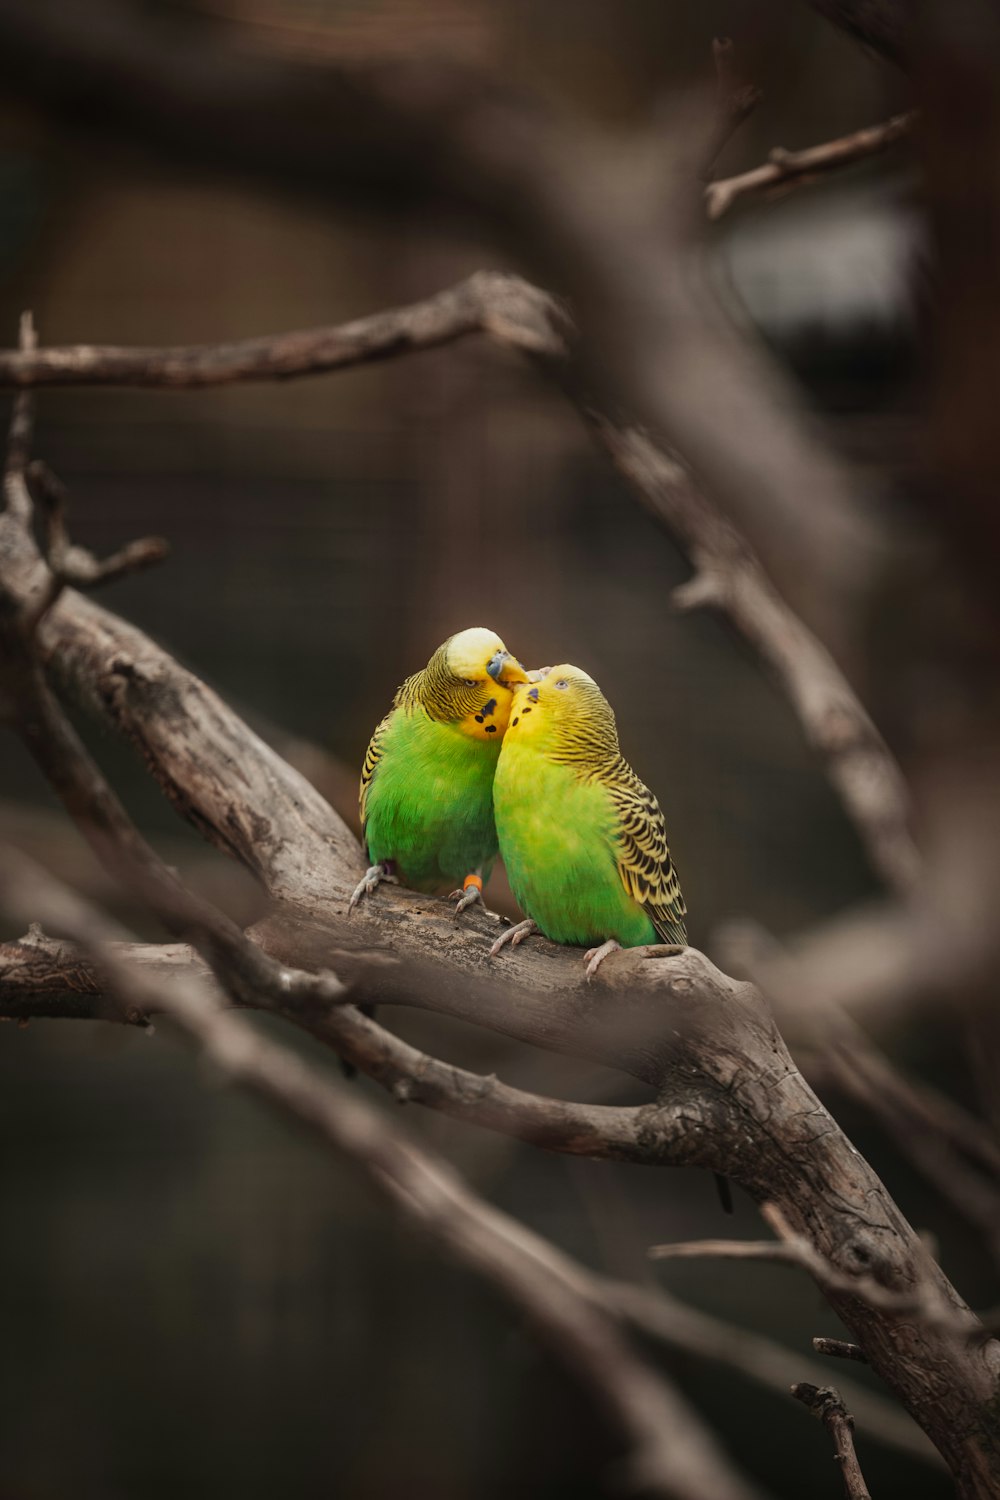 750+ Love Birds Pictures | Download Free Images on Unsplash